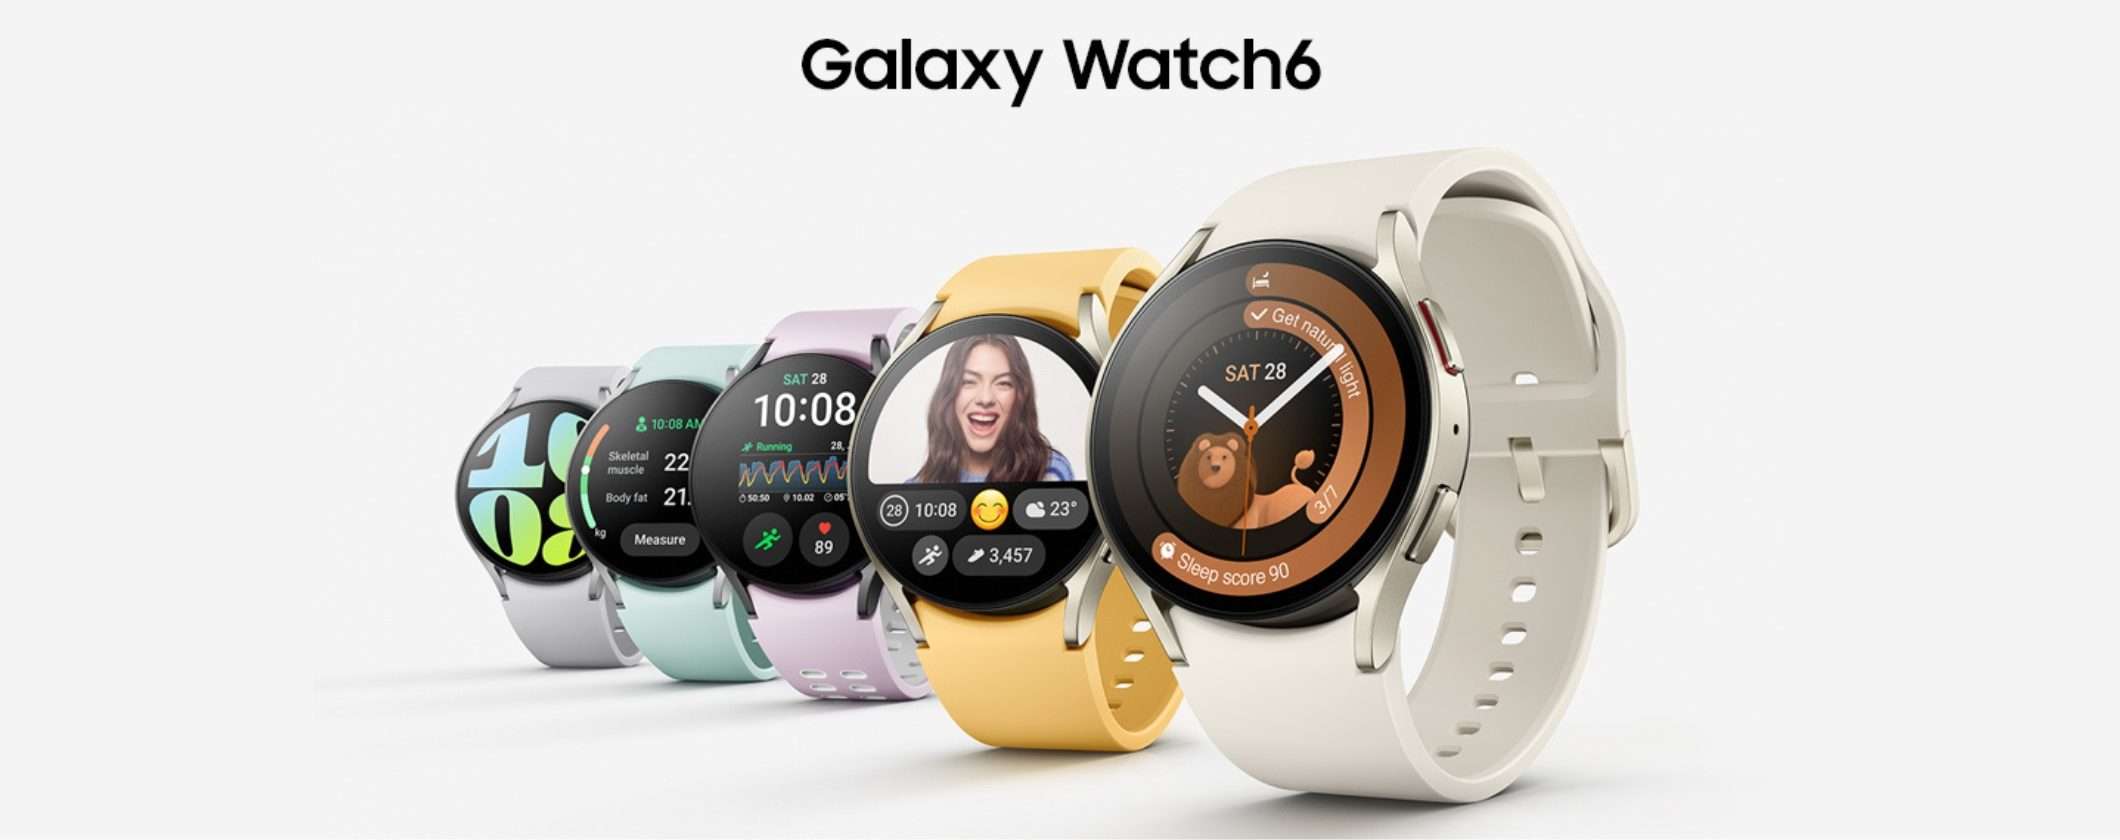 Il nuovo Samsung Galaxy Watch6 44mm già a soli 287€